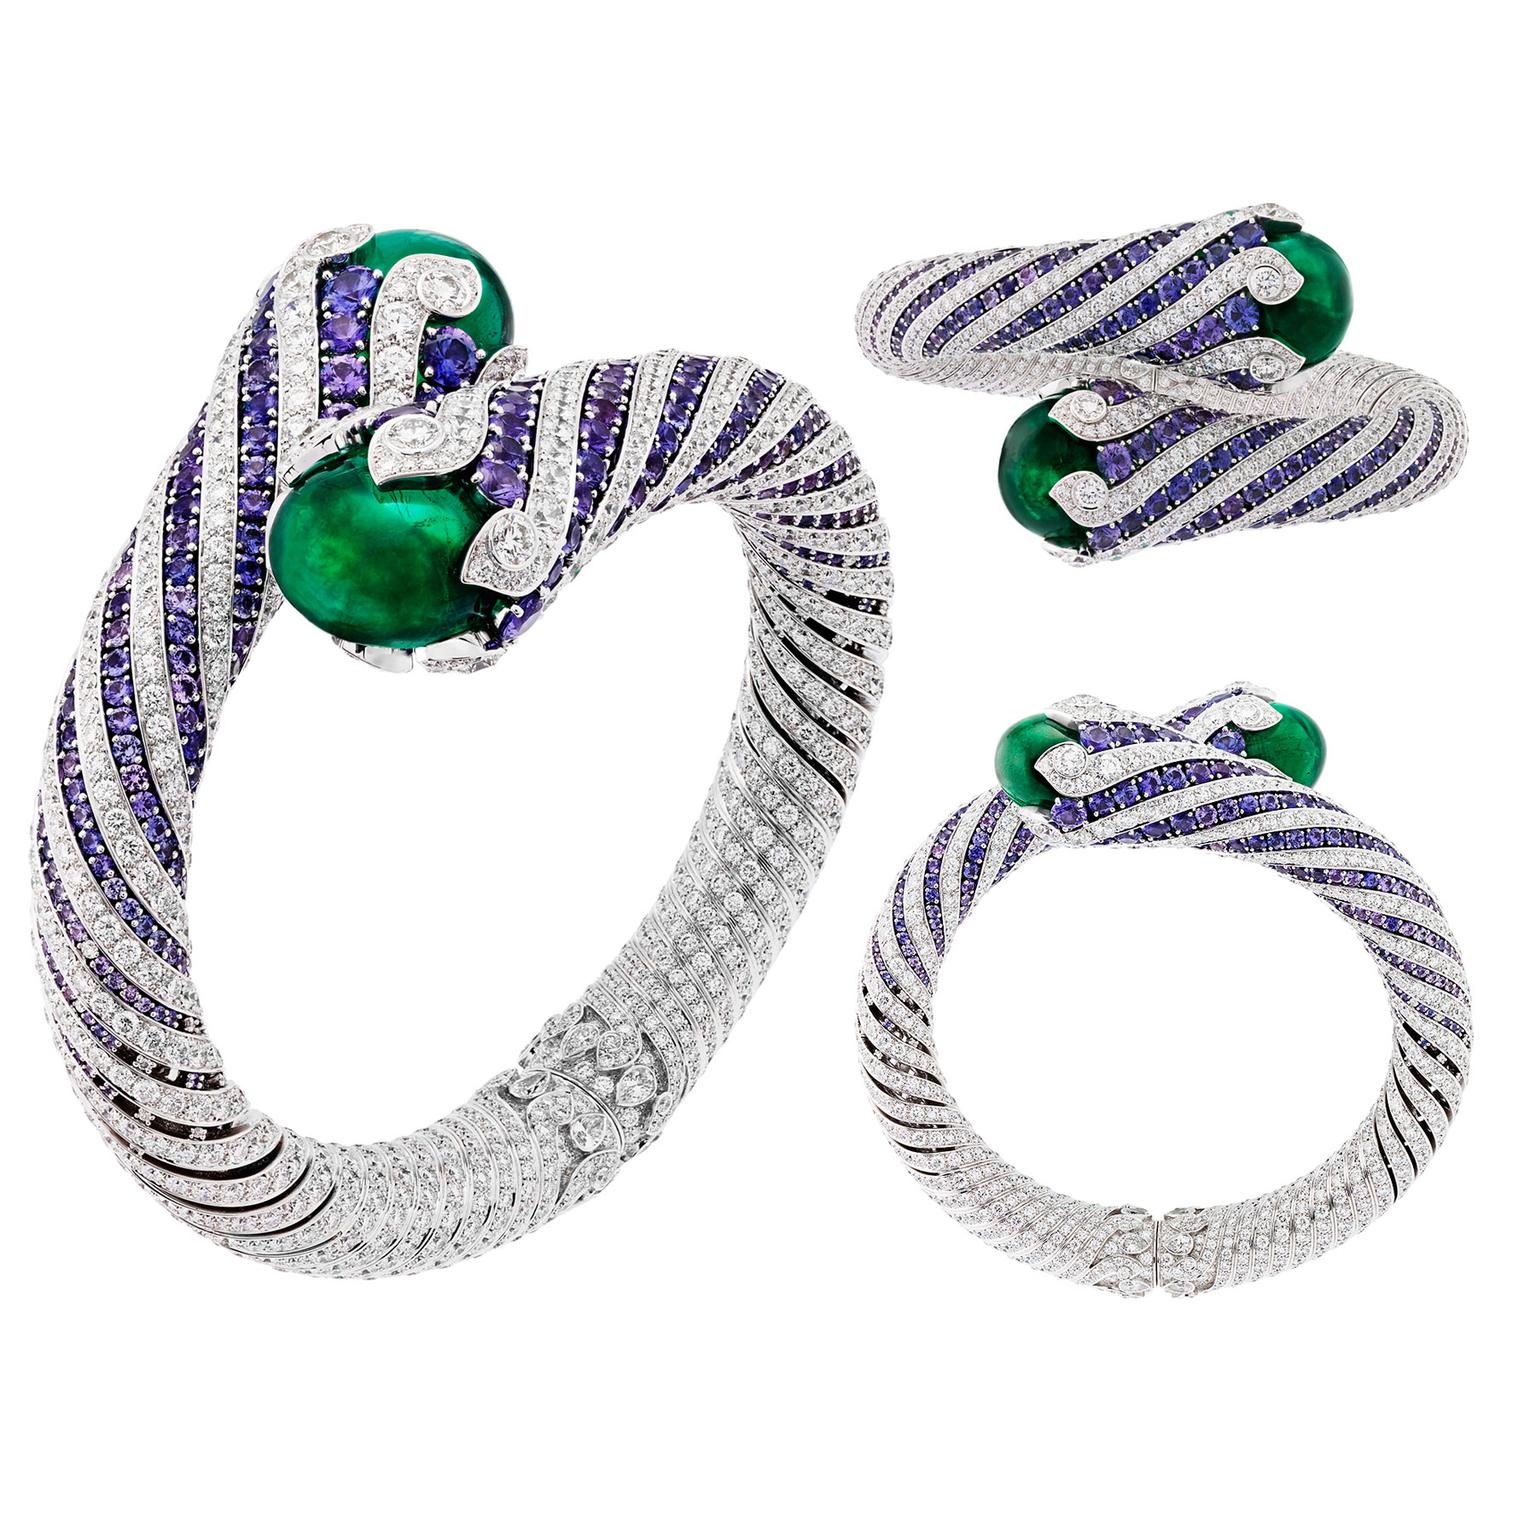 Van Cleef & Arpels Twist Émeraude violet sapphire and emerald high jewellery bracelet